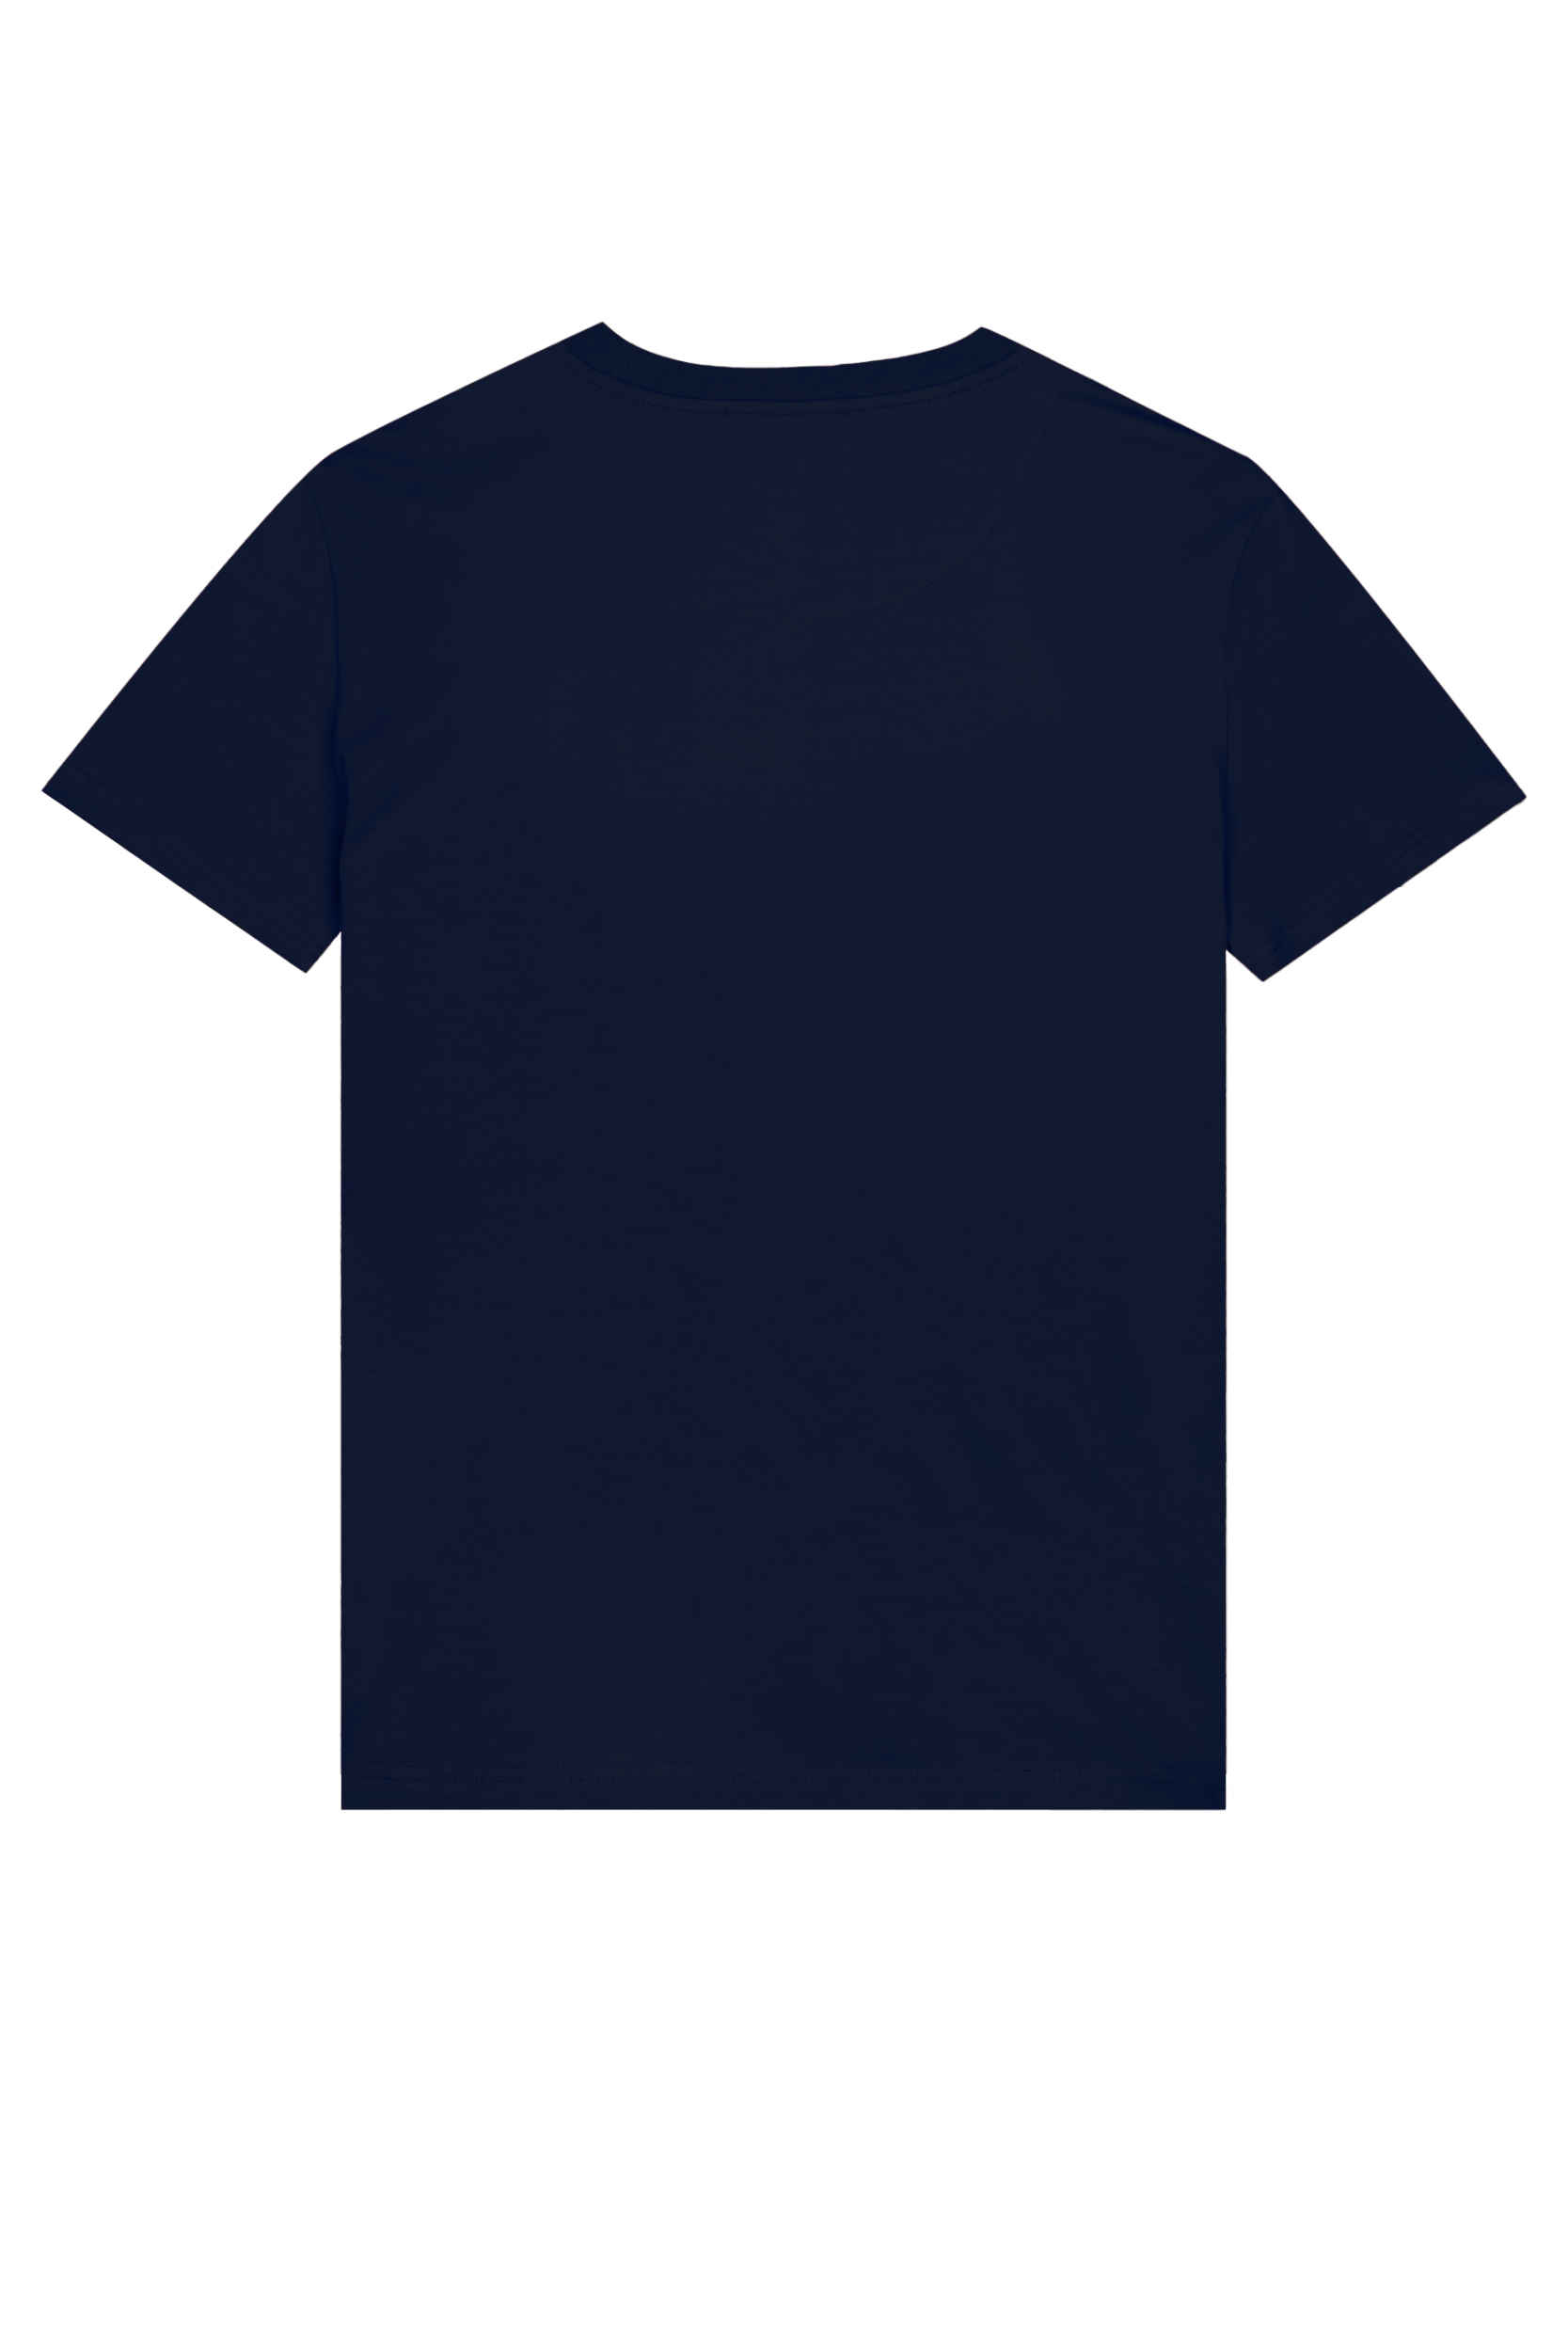 Basic Capsule Navy Tshirt | NAVY